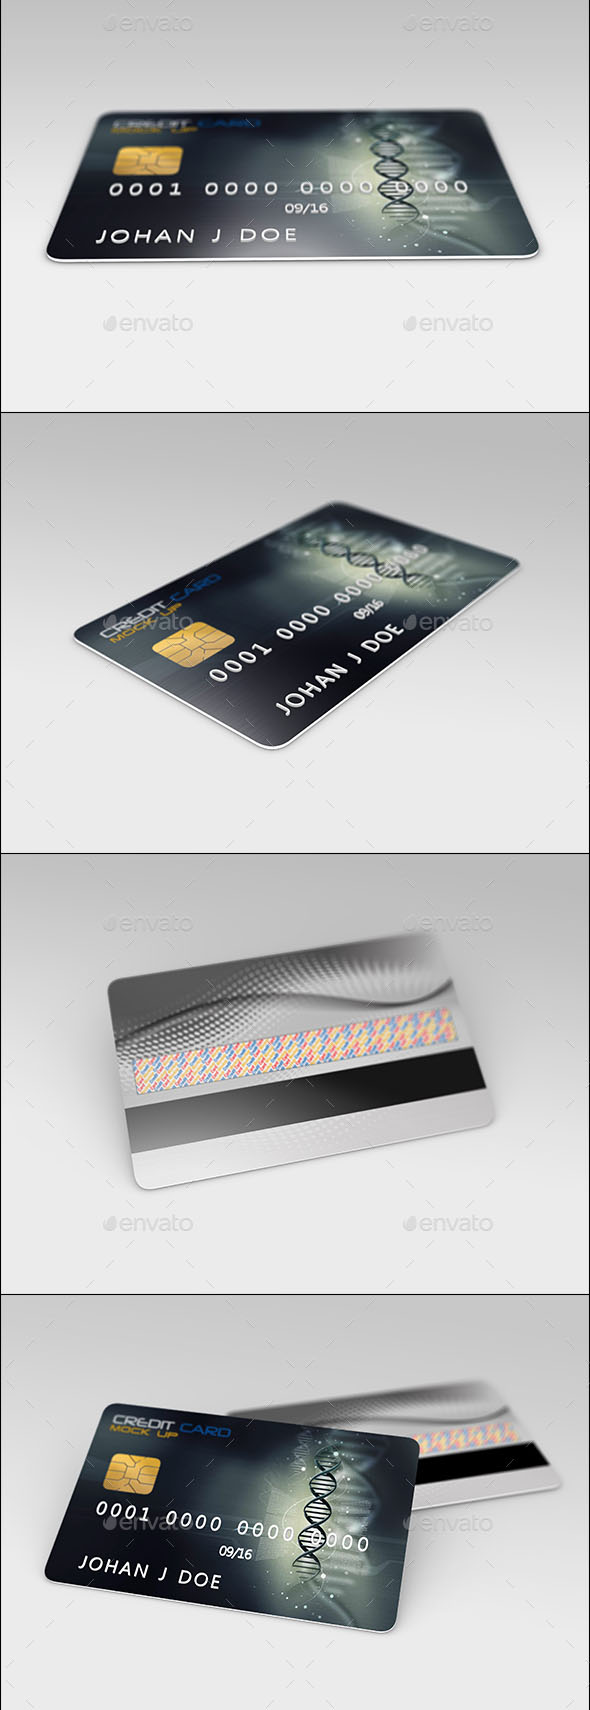 Premium Realistic Credit Card Mock-up